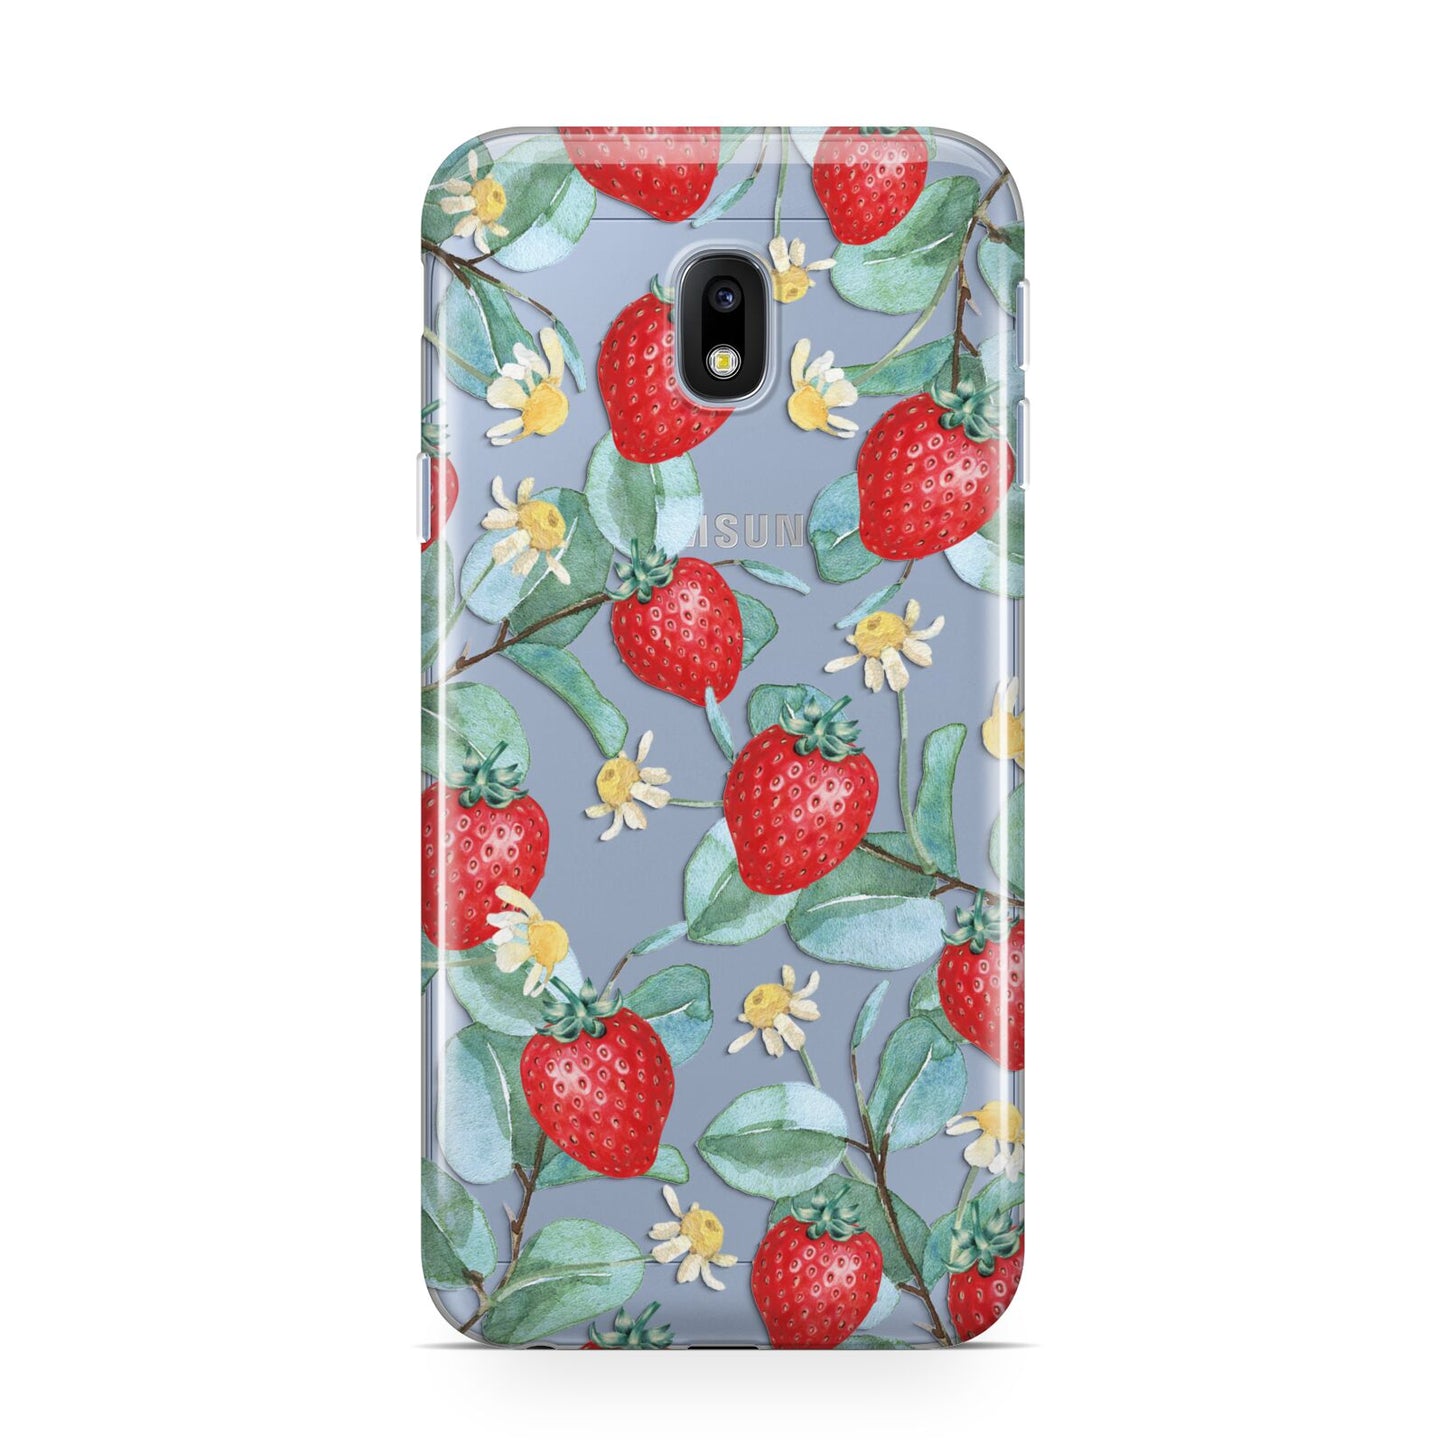 Strawberry Plant Samsung Galaxy J3 2017 Case